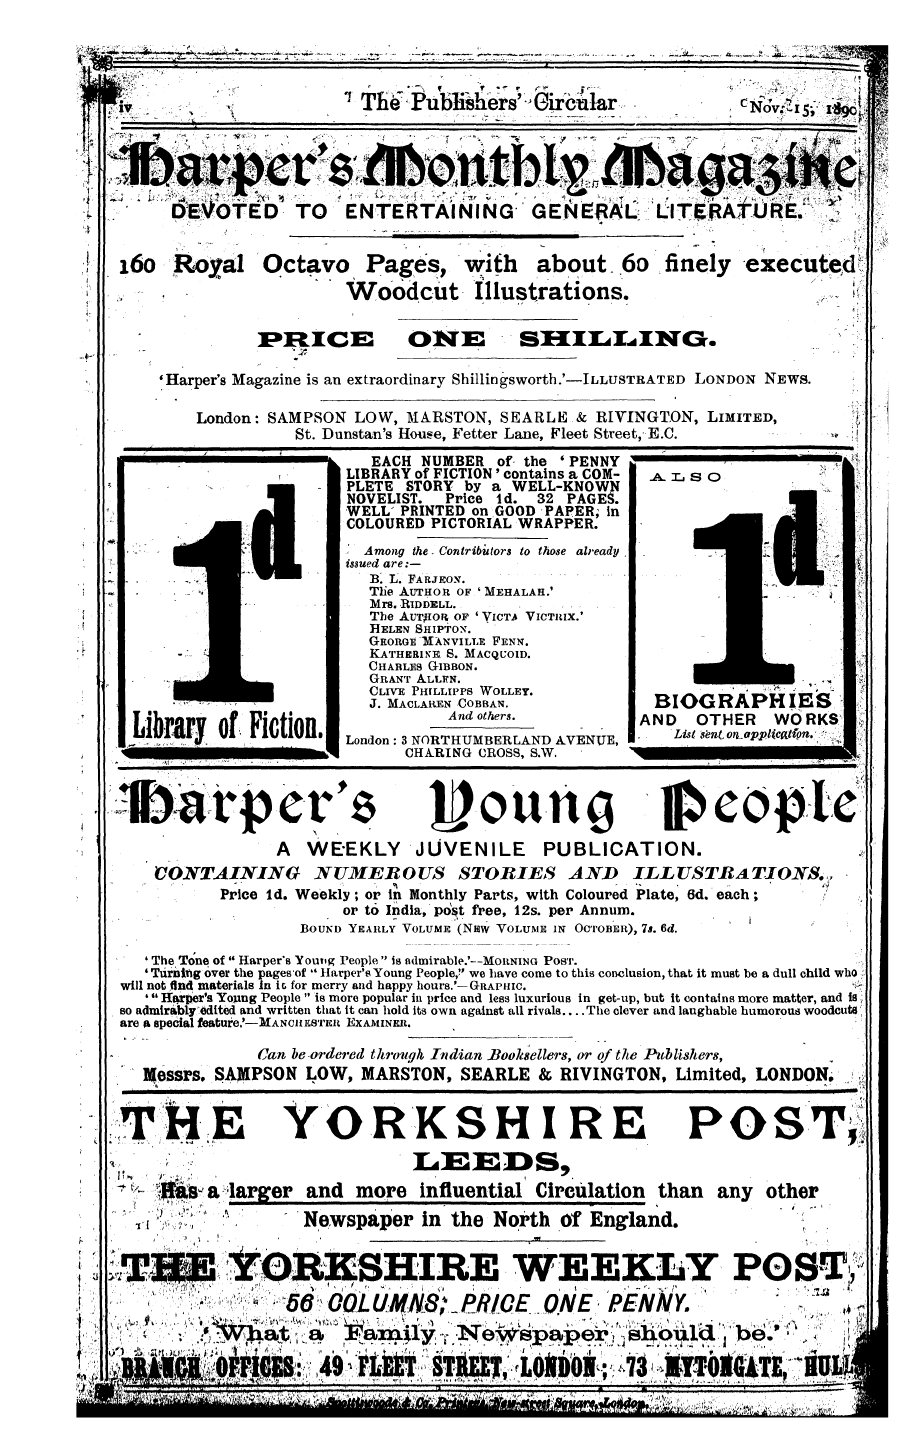 Publishers’ Circular (1880-1890): jS F Y, 1st edition - Ad06802